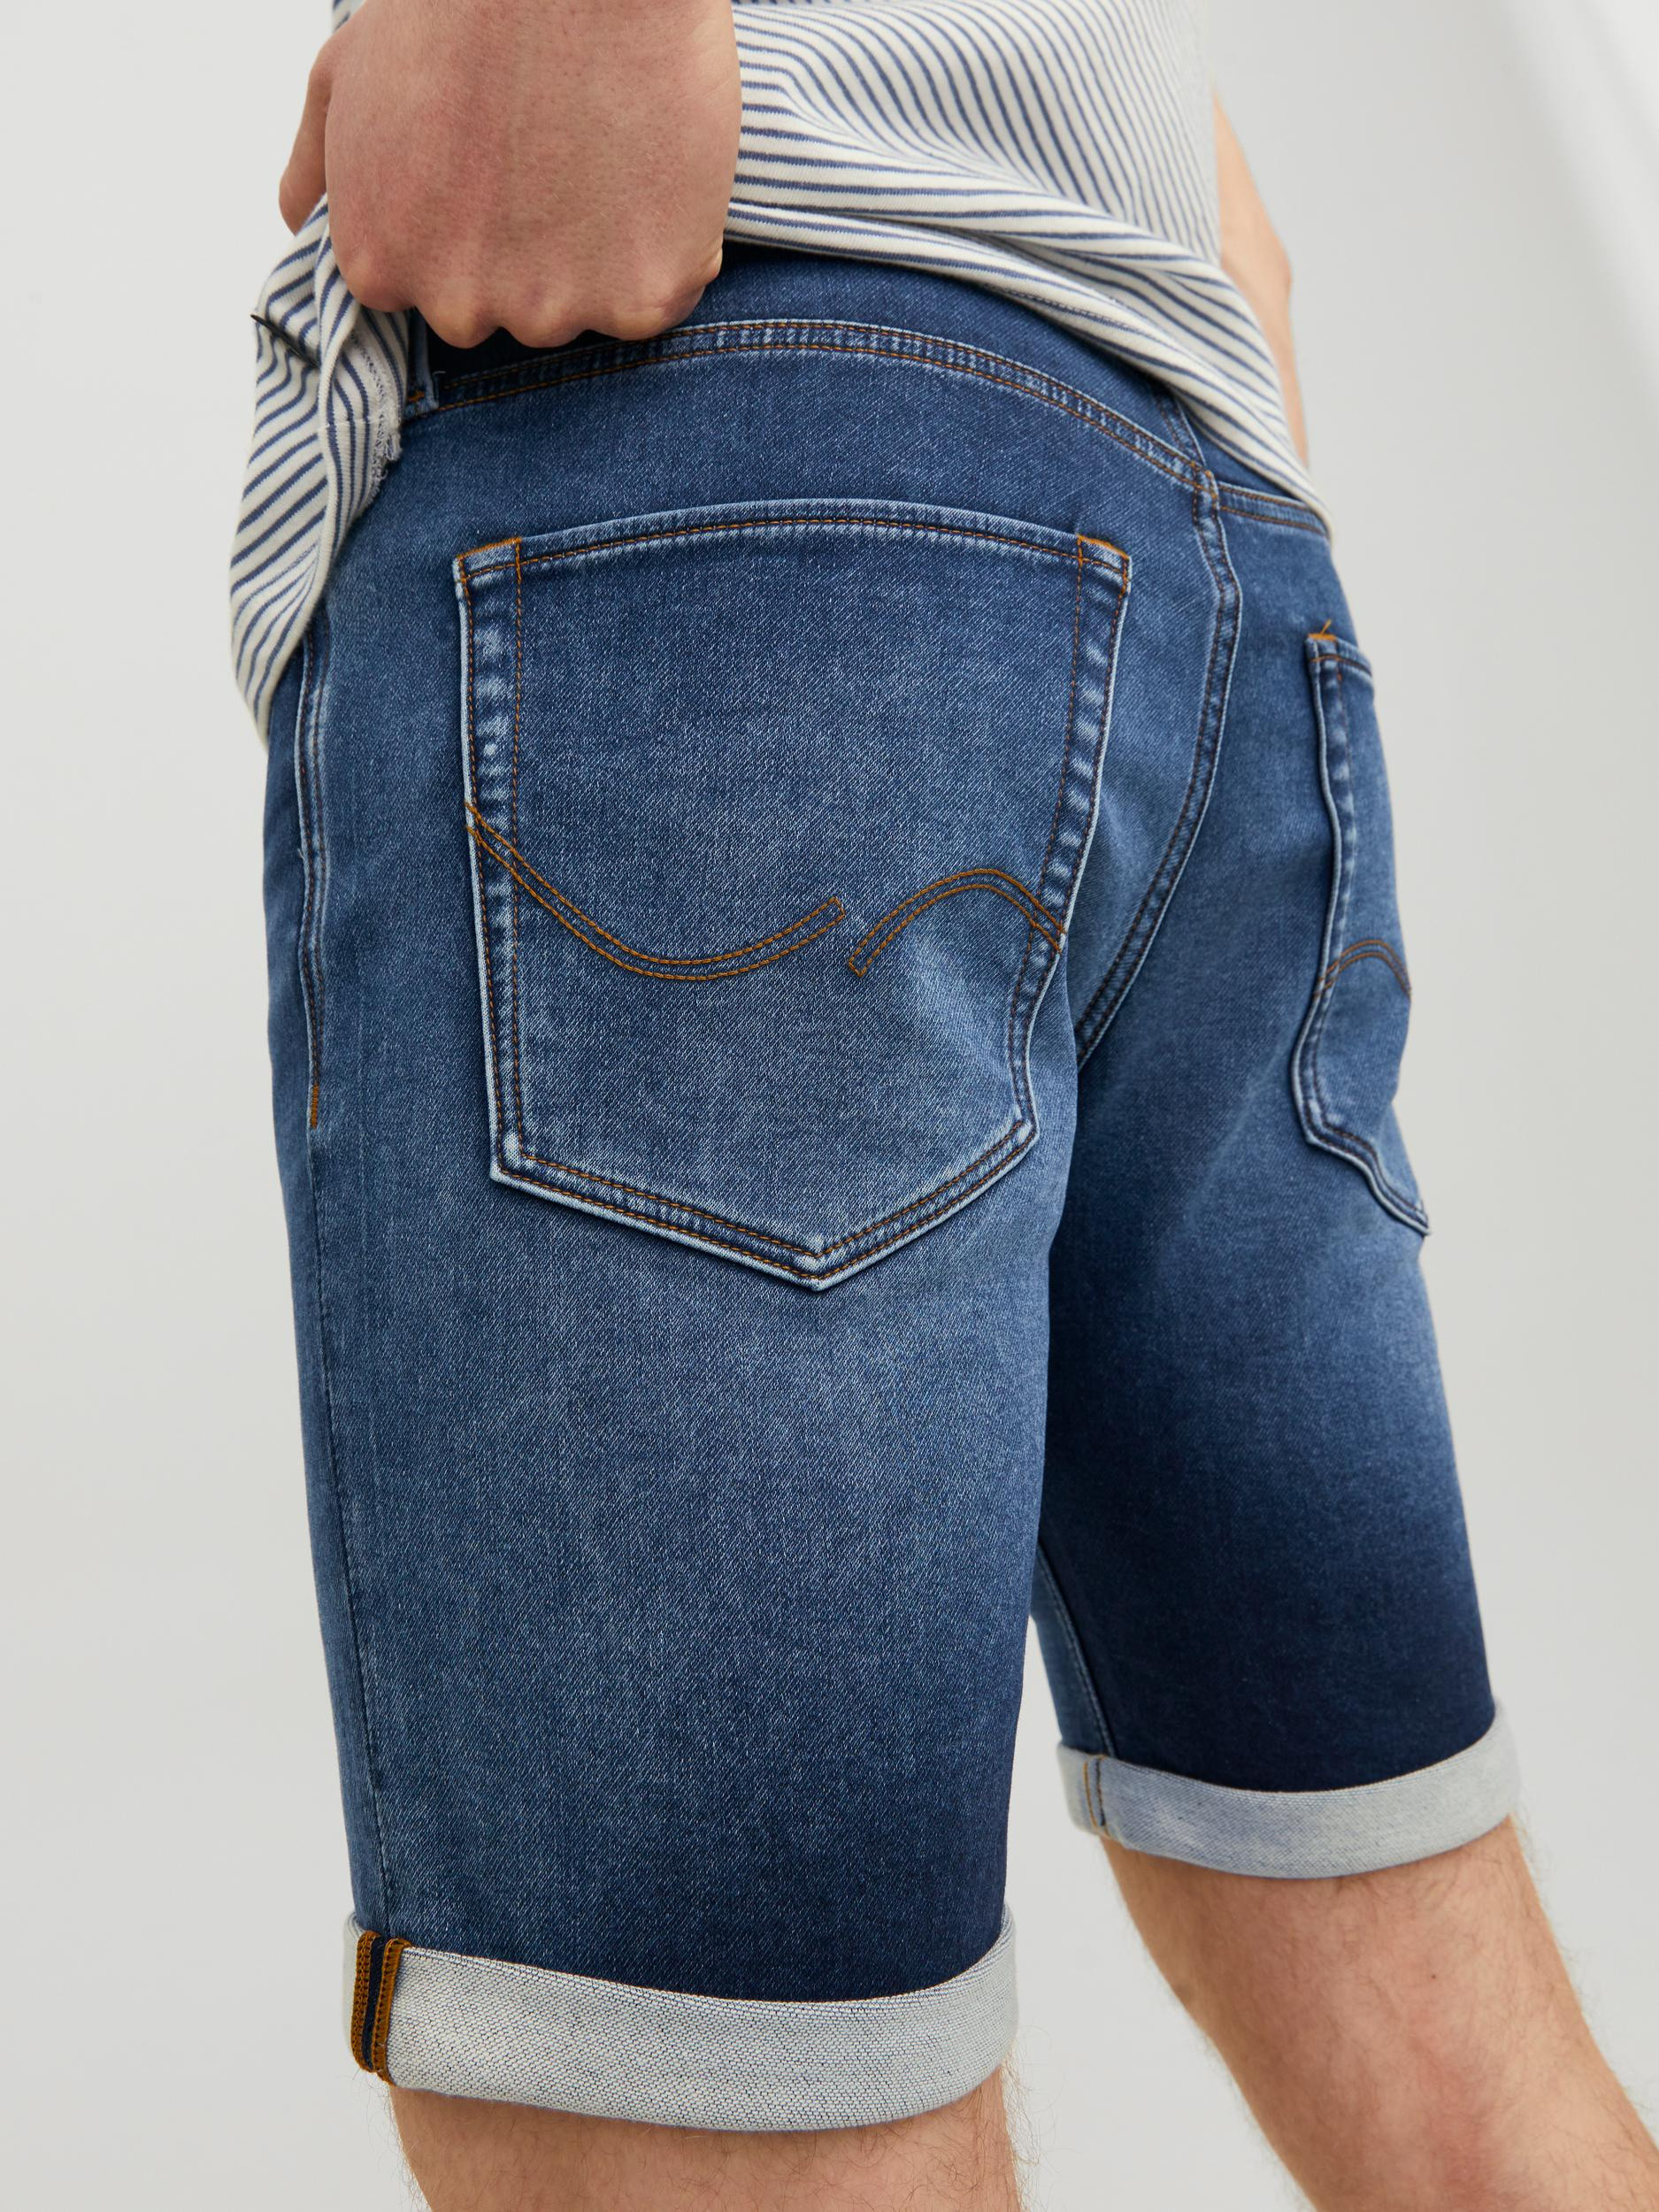 Jack & Jones - Bermuda cinque tasche in jeans, Denim, large image number 3